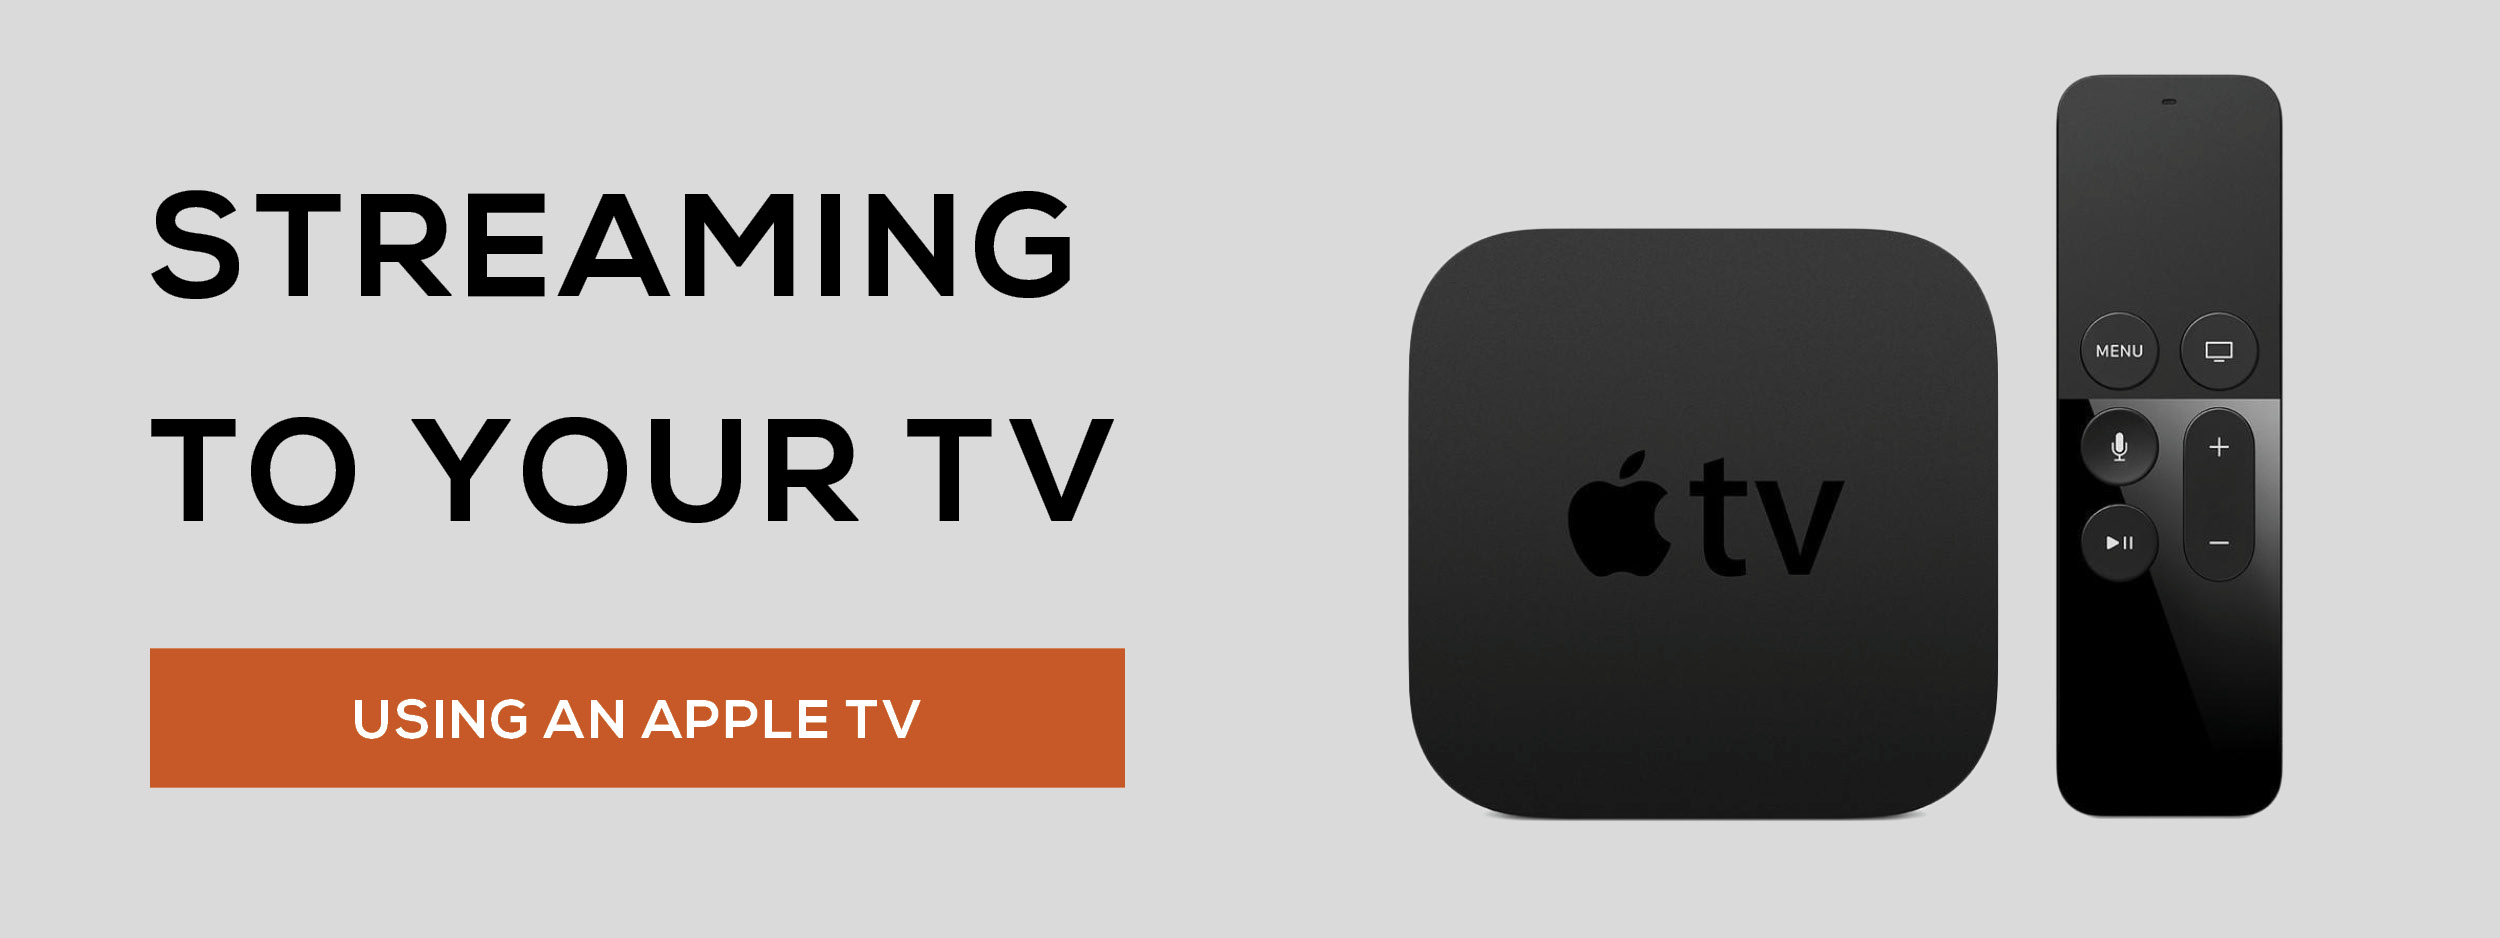 Stream using an Apple TV